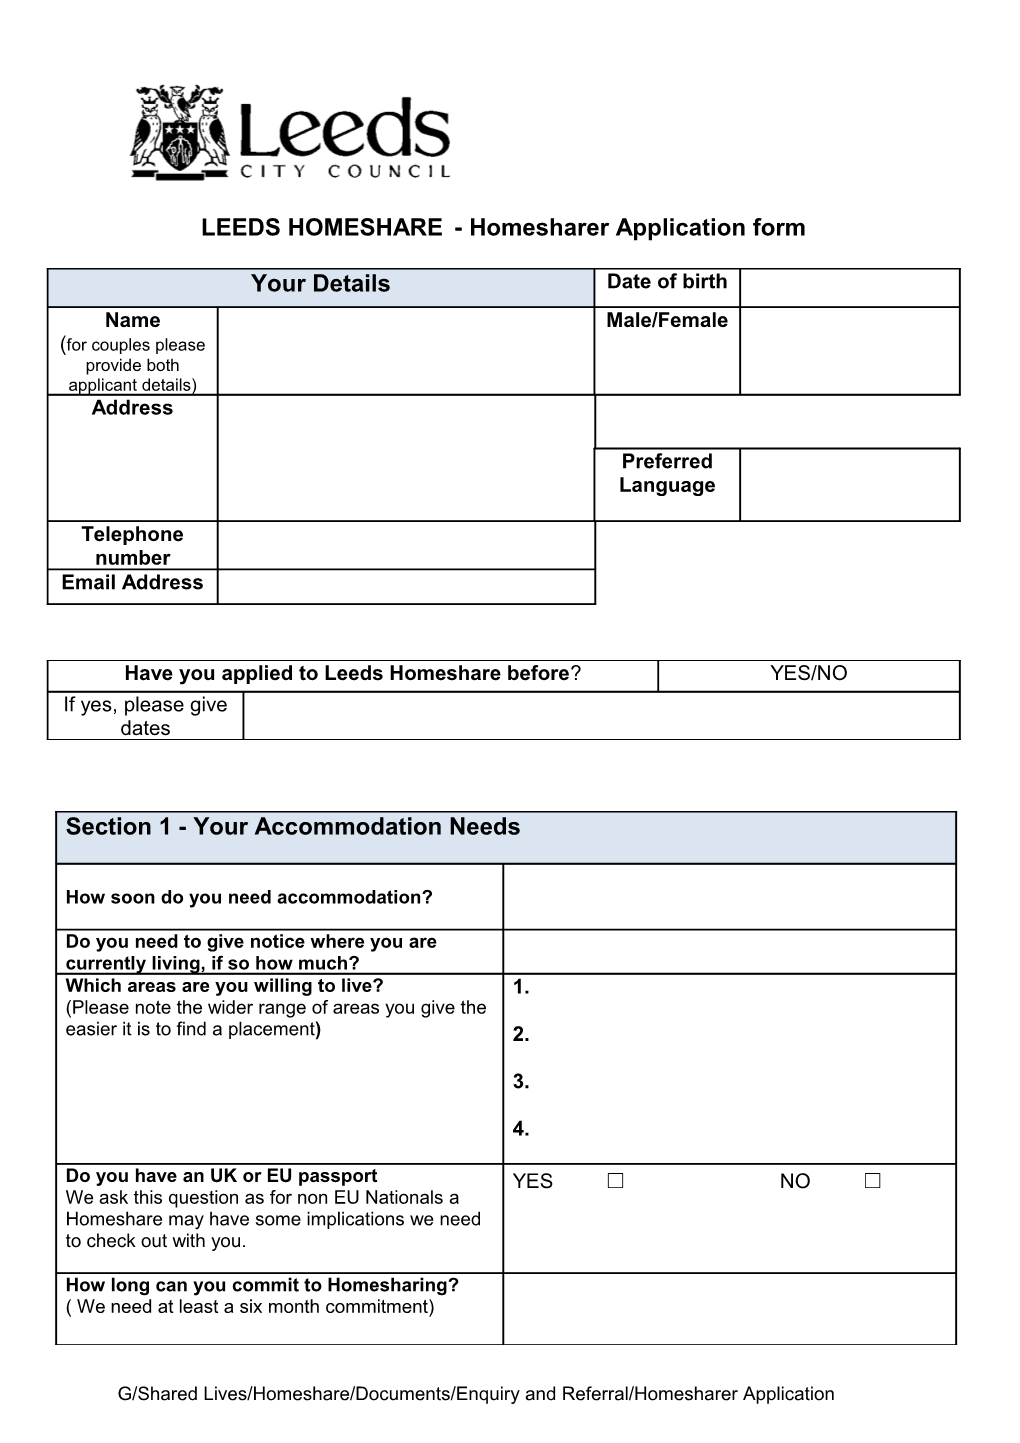 LEEDS HOMESHARE - Homesharer Application Form